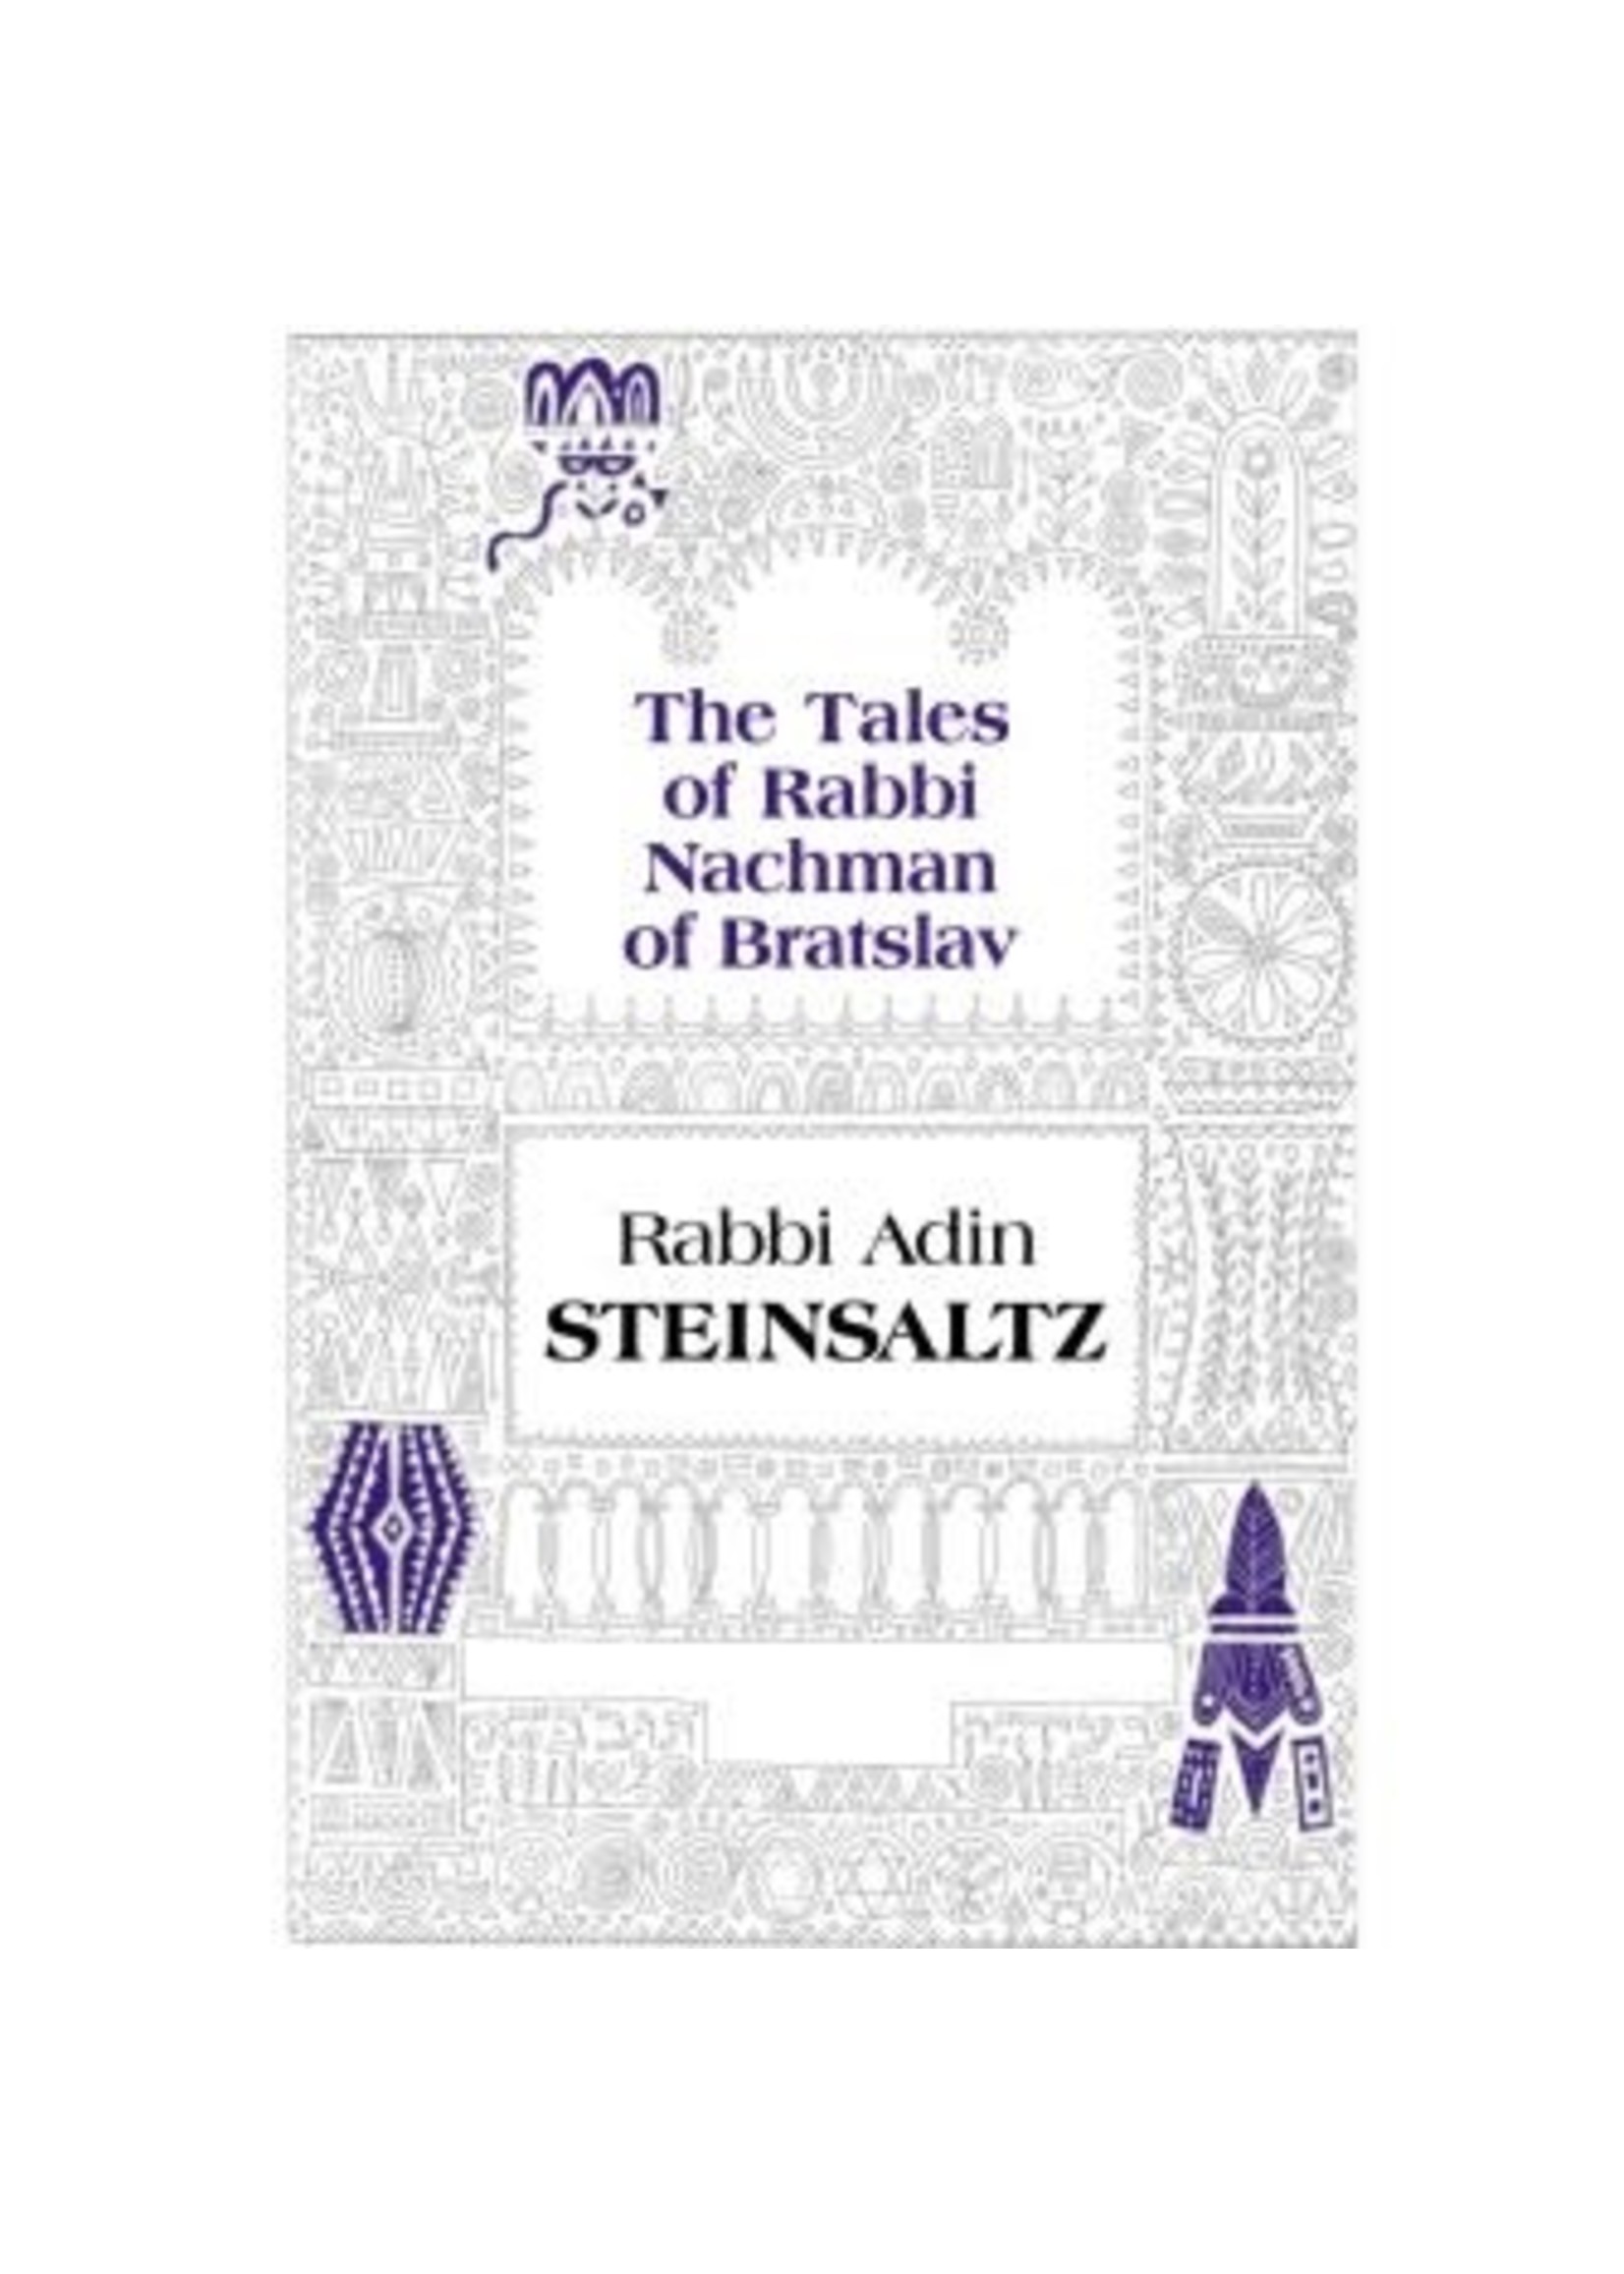 THE TALES OF RABBI NACHMAN OF